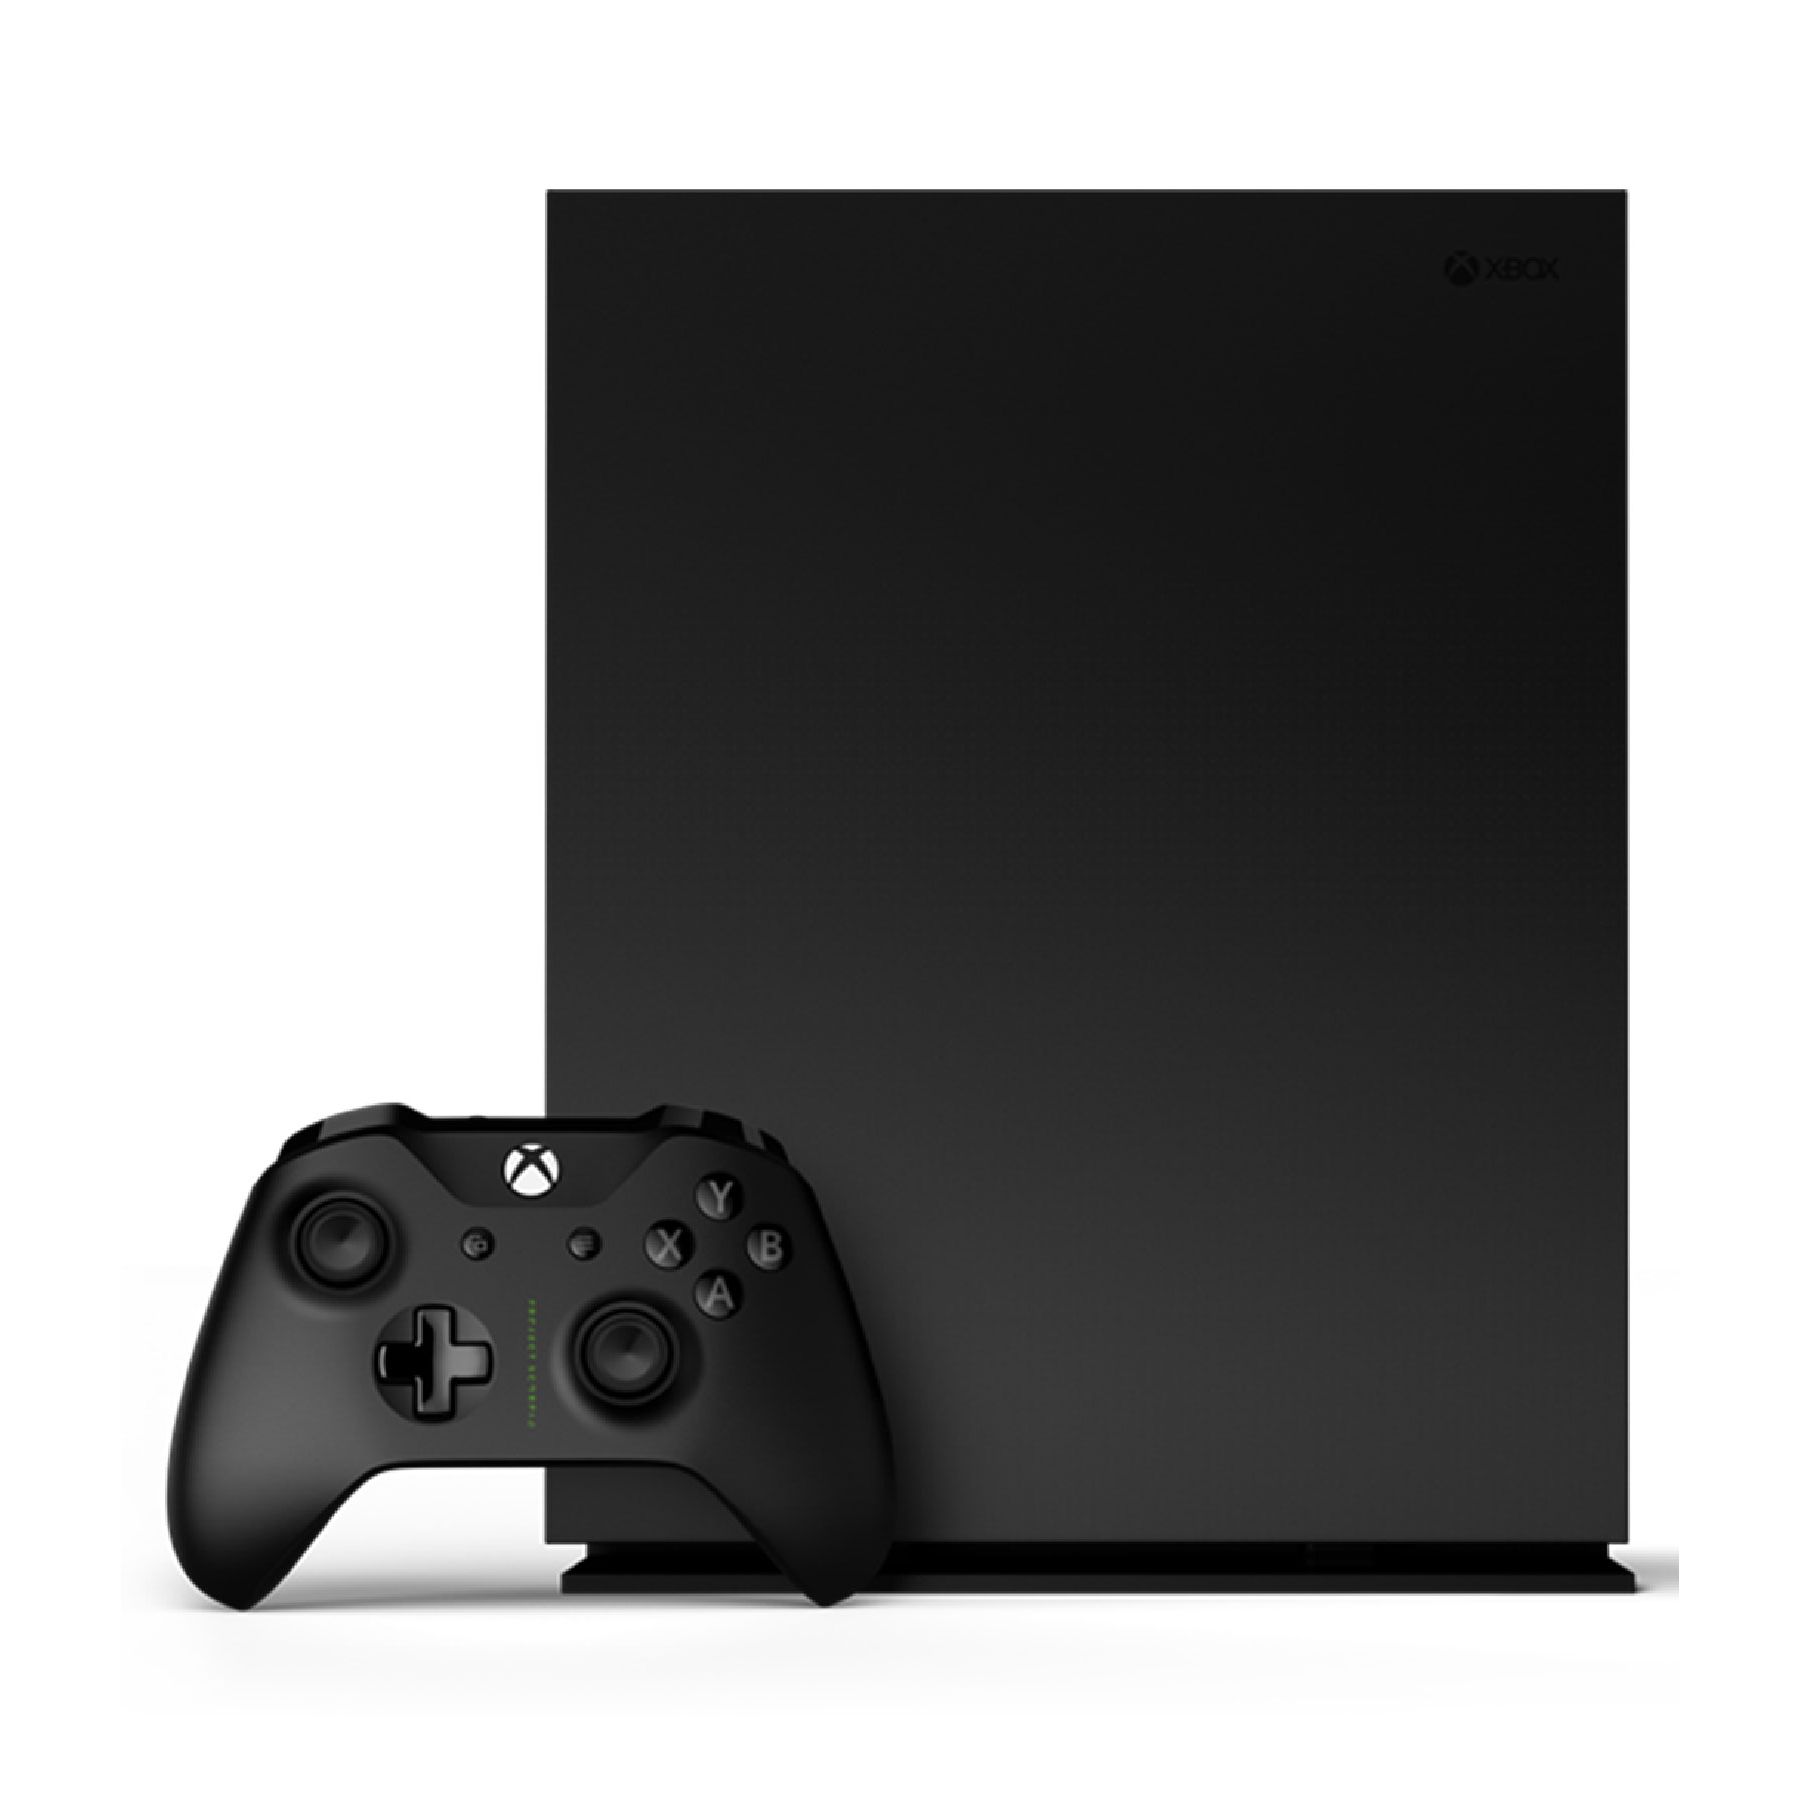 Xbox One X 1TB Console (2017 Model)